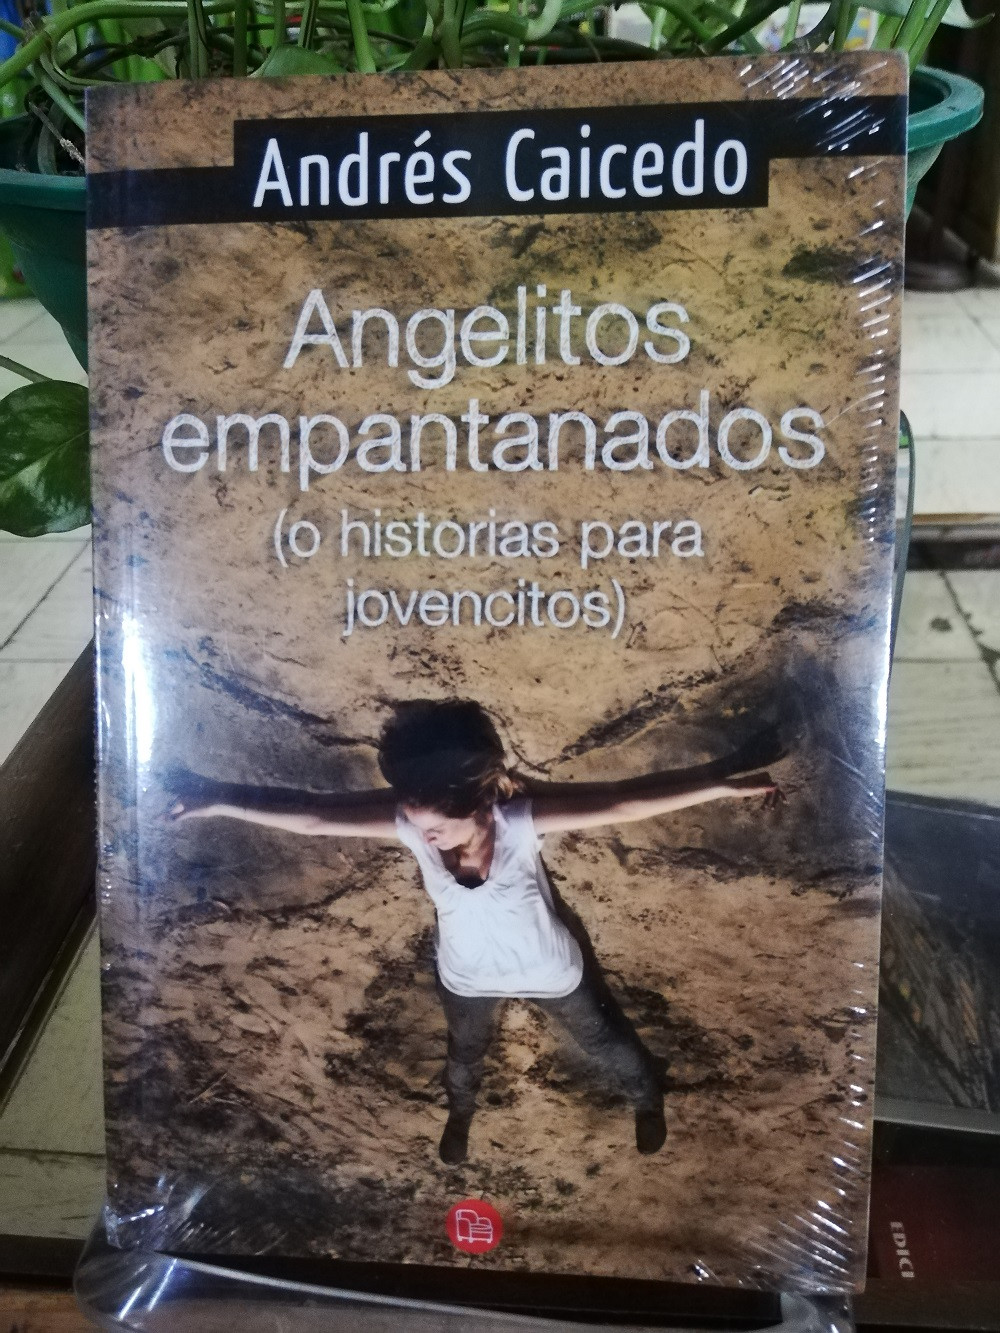 Imagen LIBRO NUEVO ANGELITOS EMPANTANADOS - ANDRES CAICEDO 1